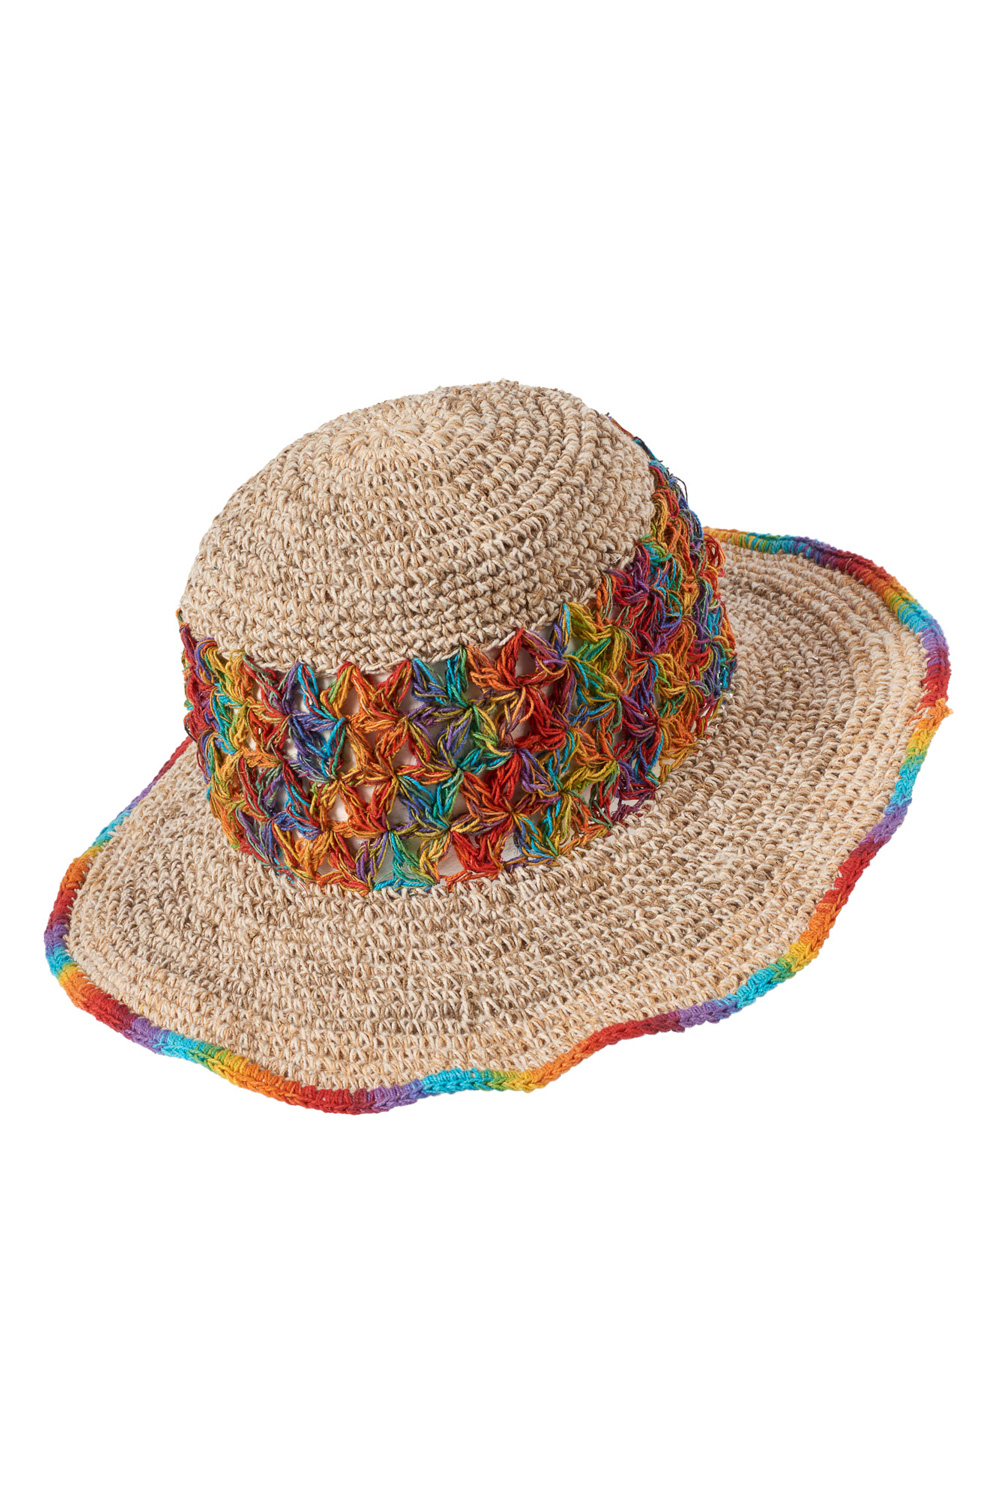 Woven hemp crochet rainbow hat